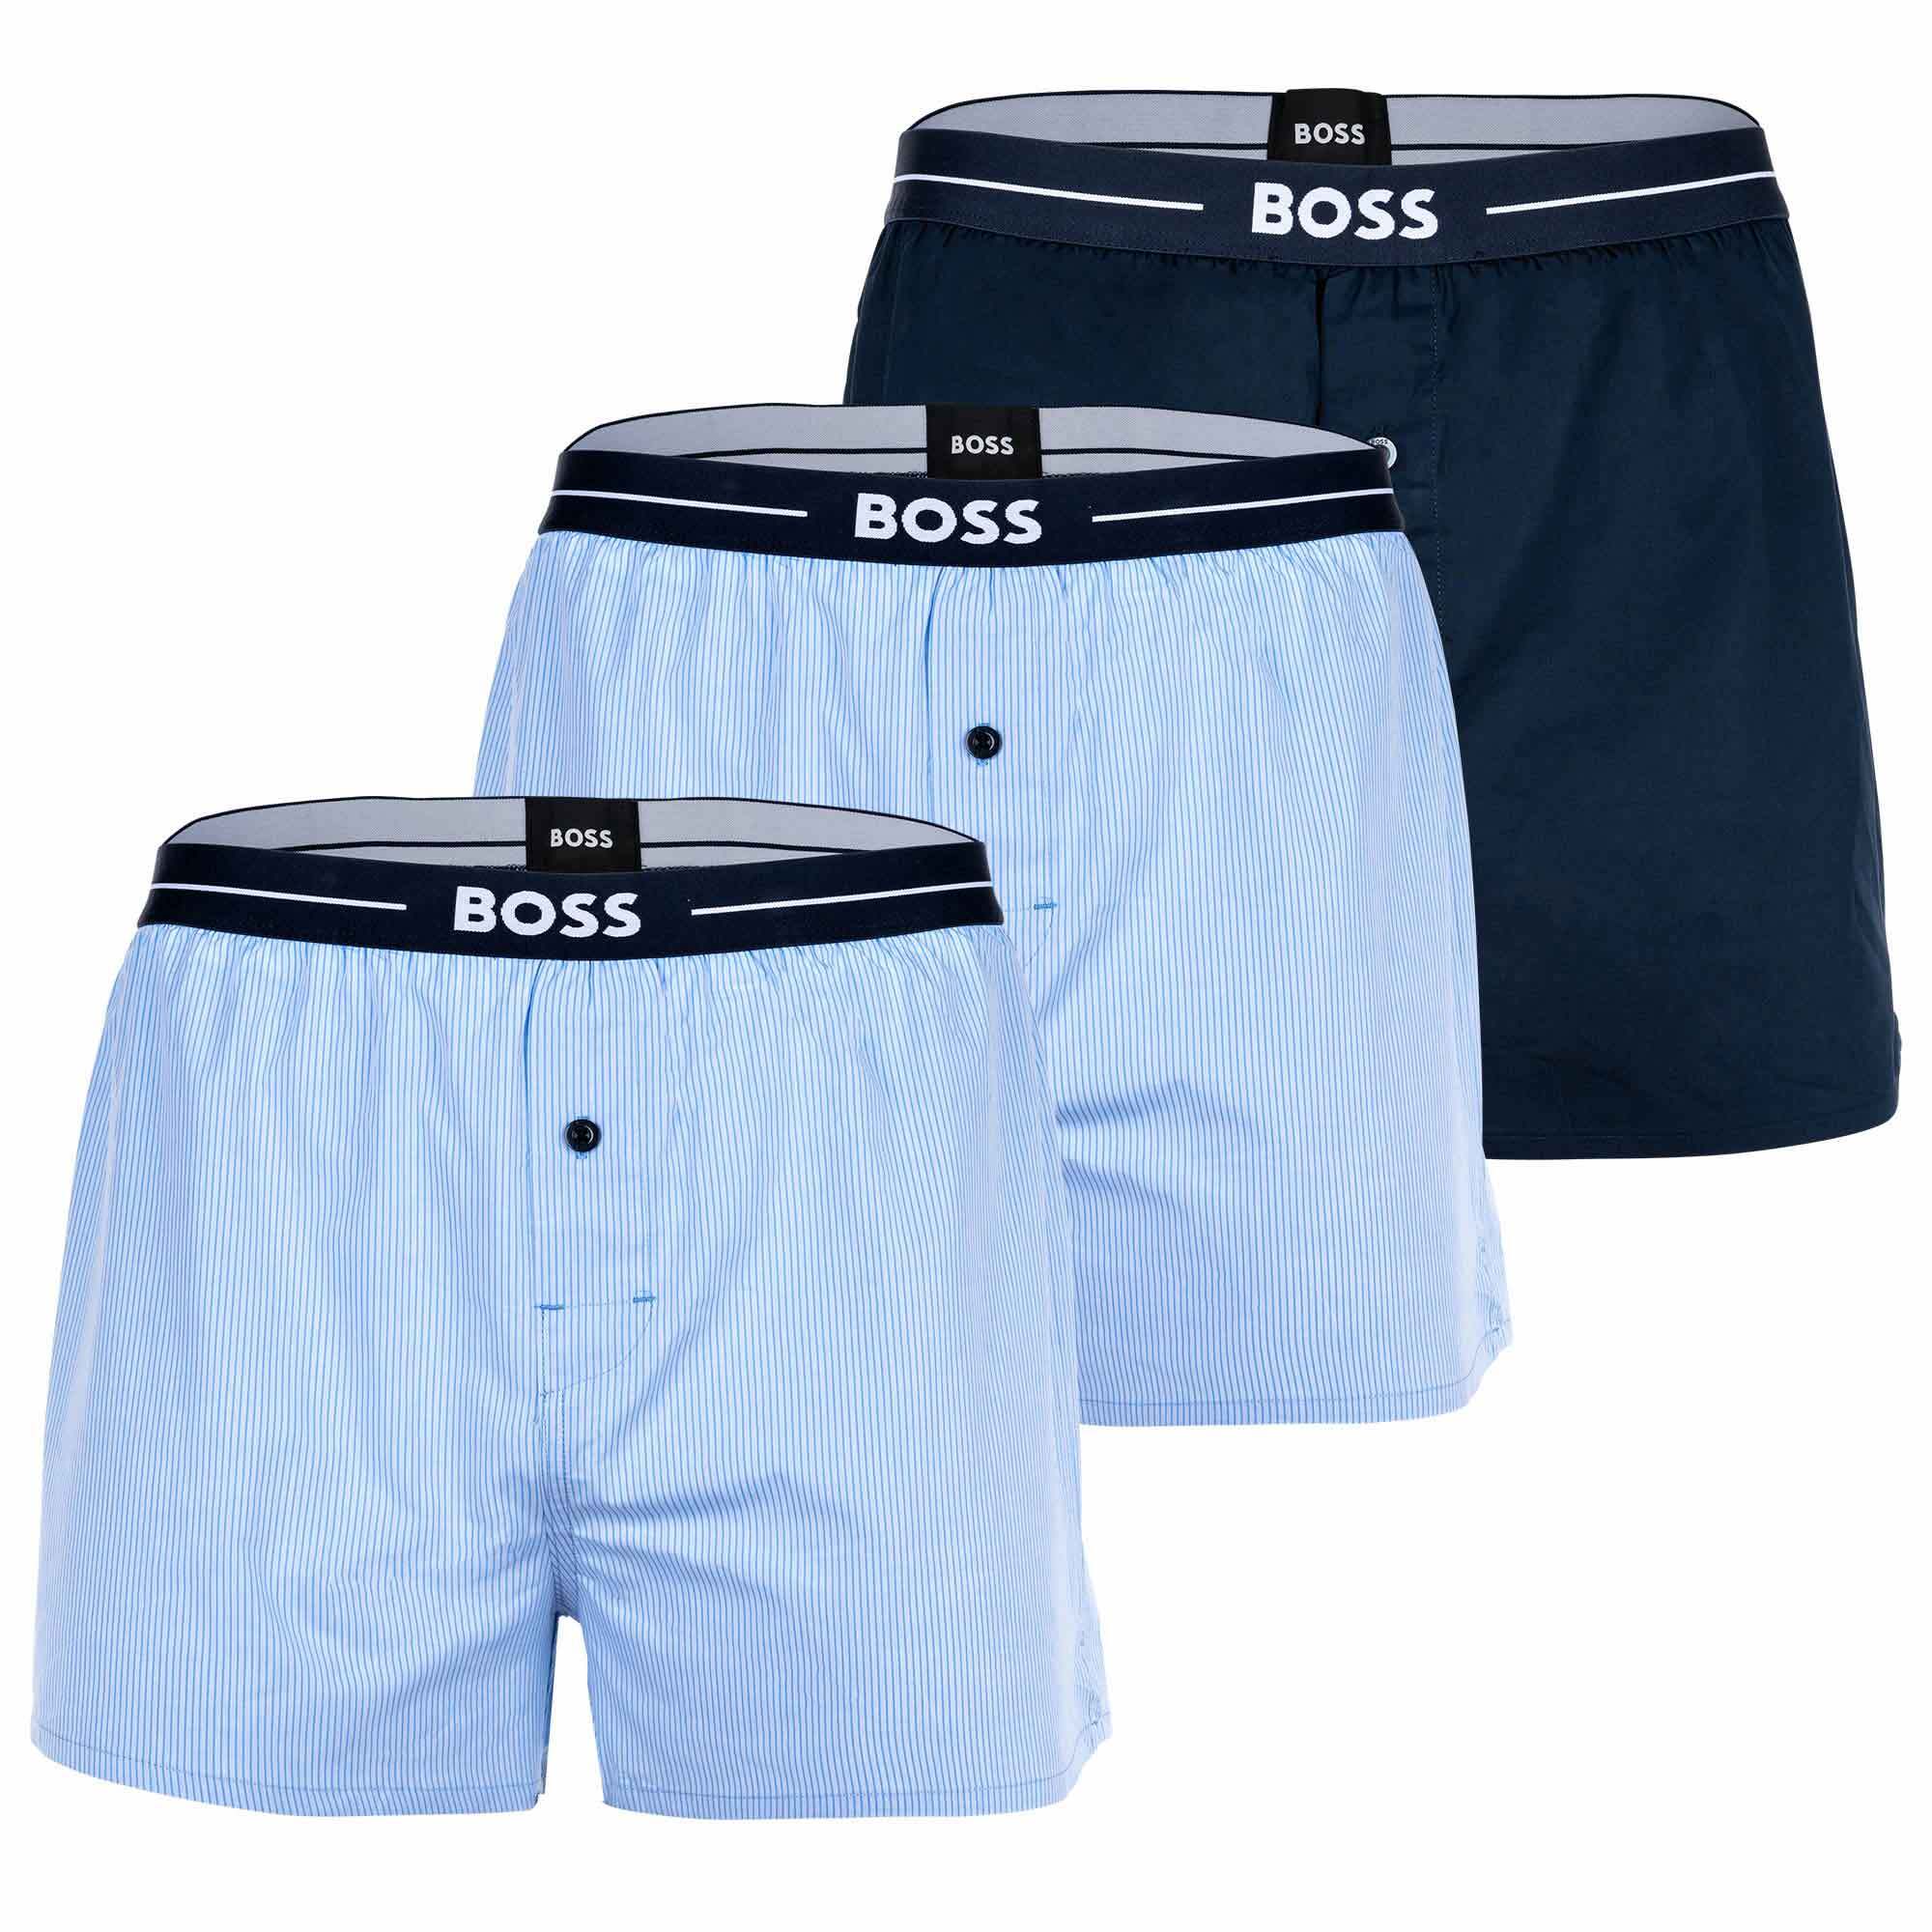 Боксеры BOSS Web-Boxershorts 3 шт, синий